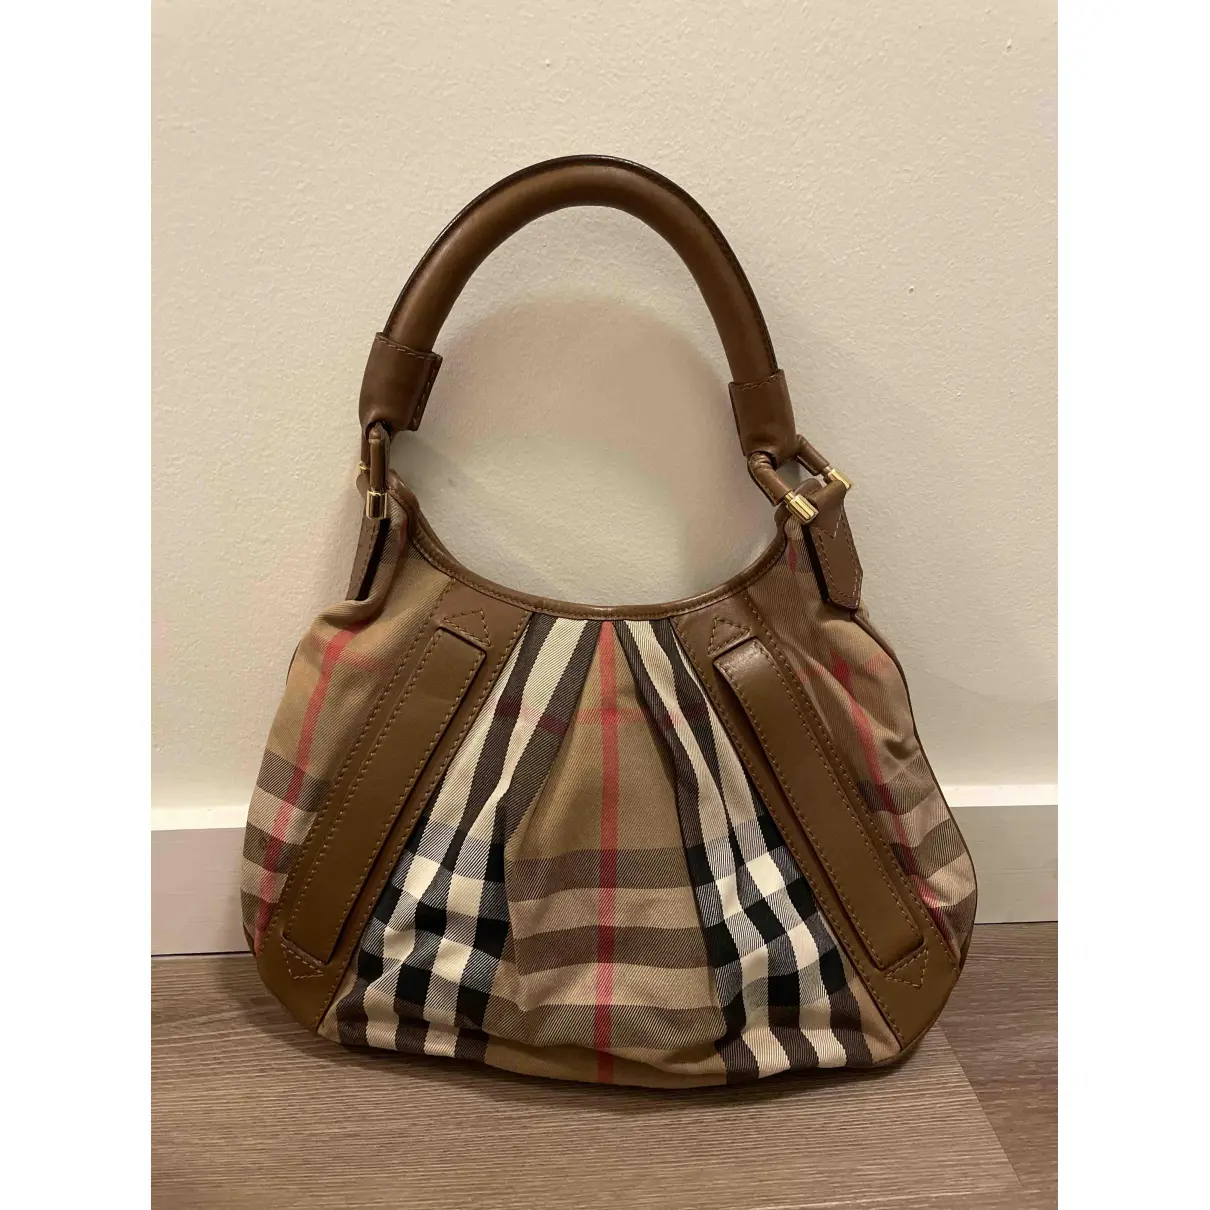 Buy Burberry Leather handbag online